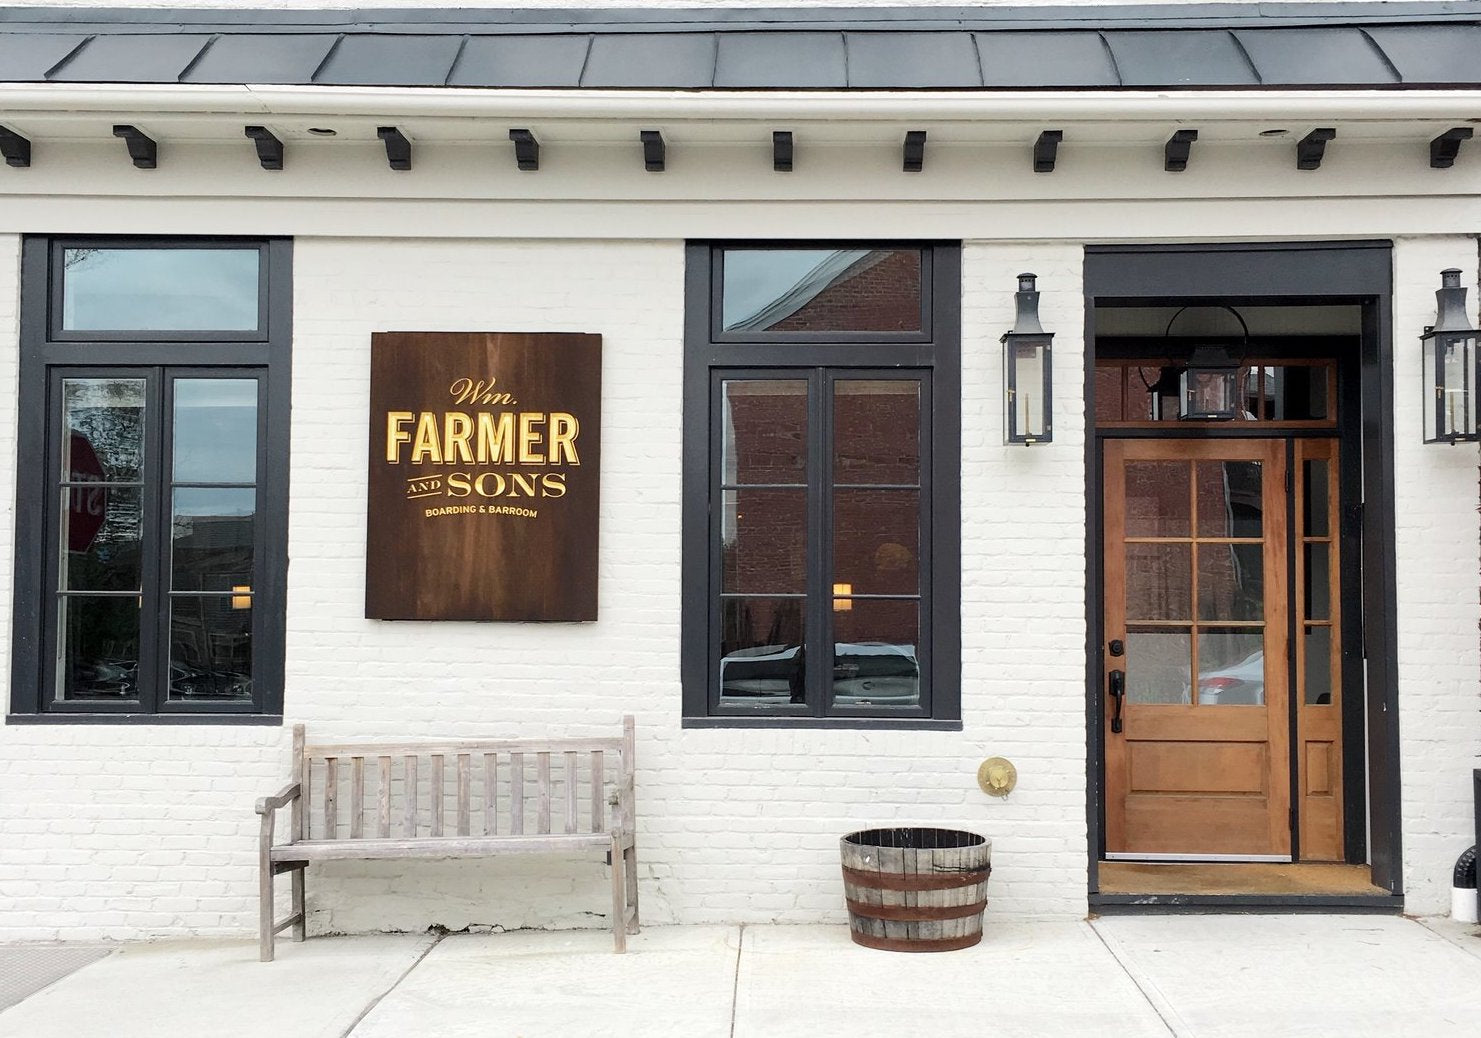 Our Favorite Places: Wm. Farmer & Sons